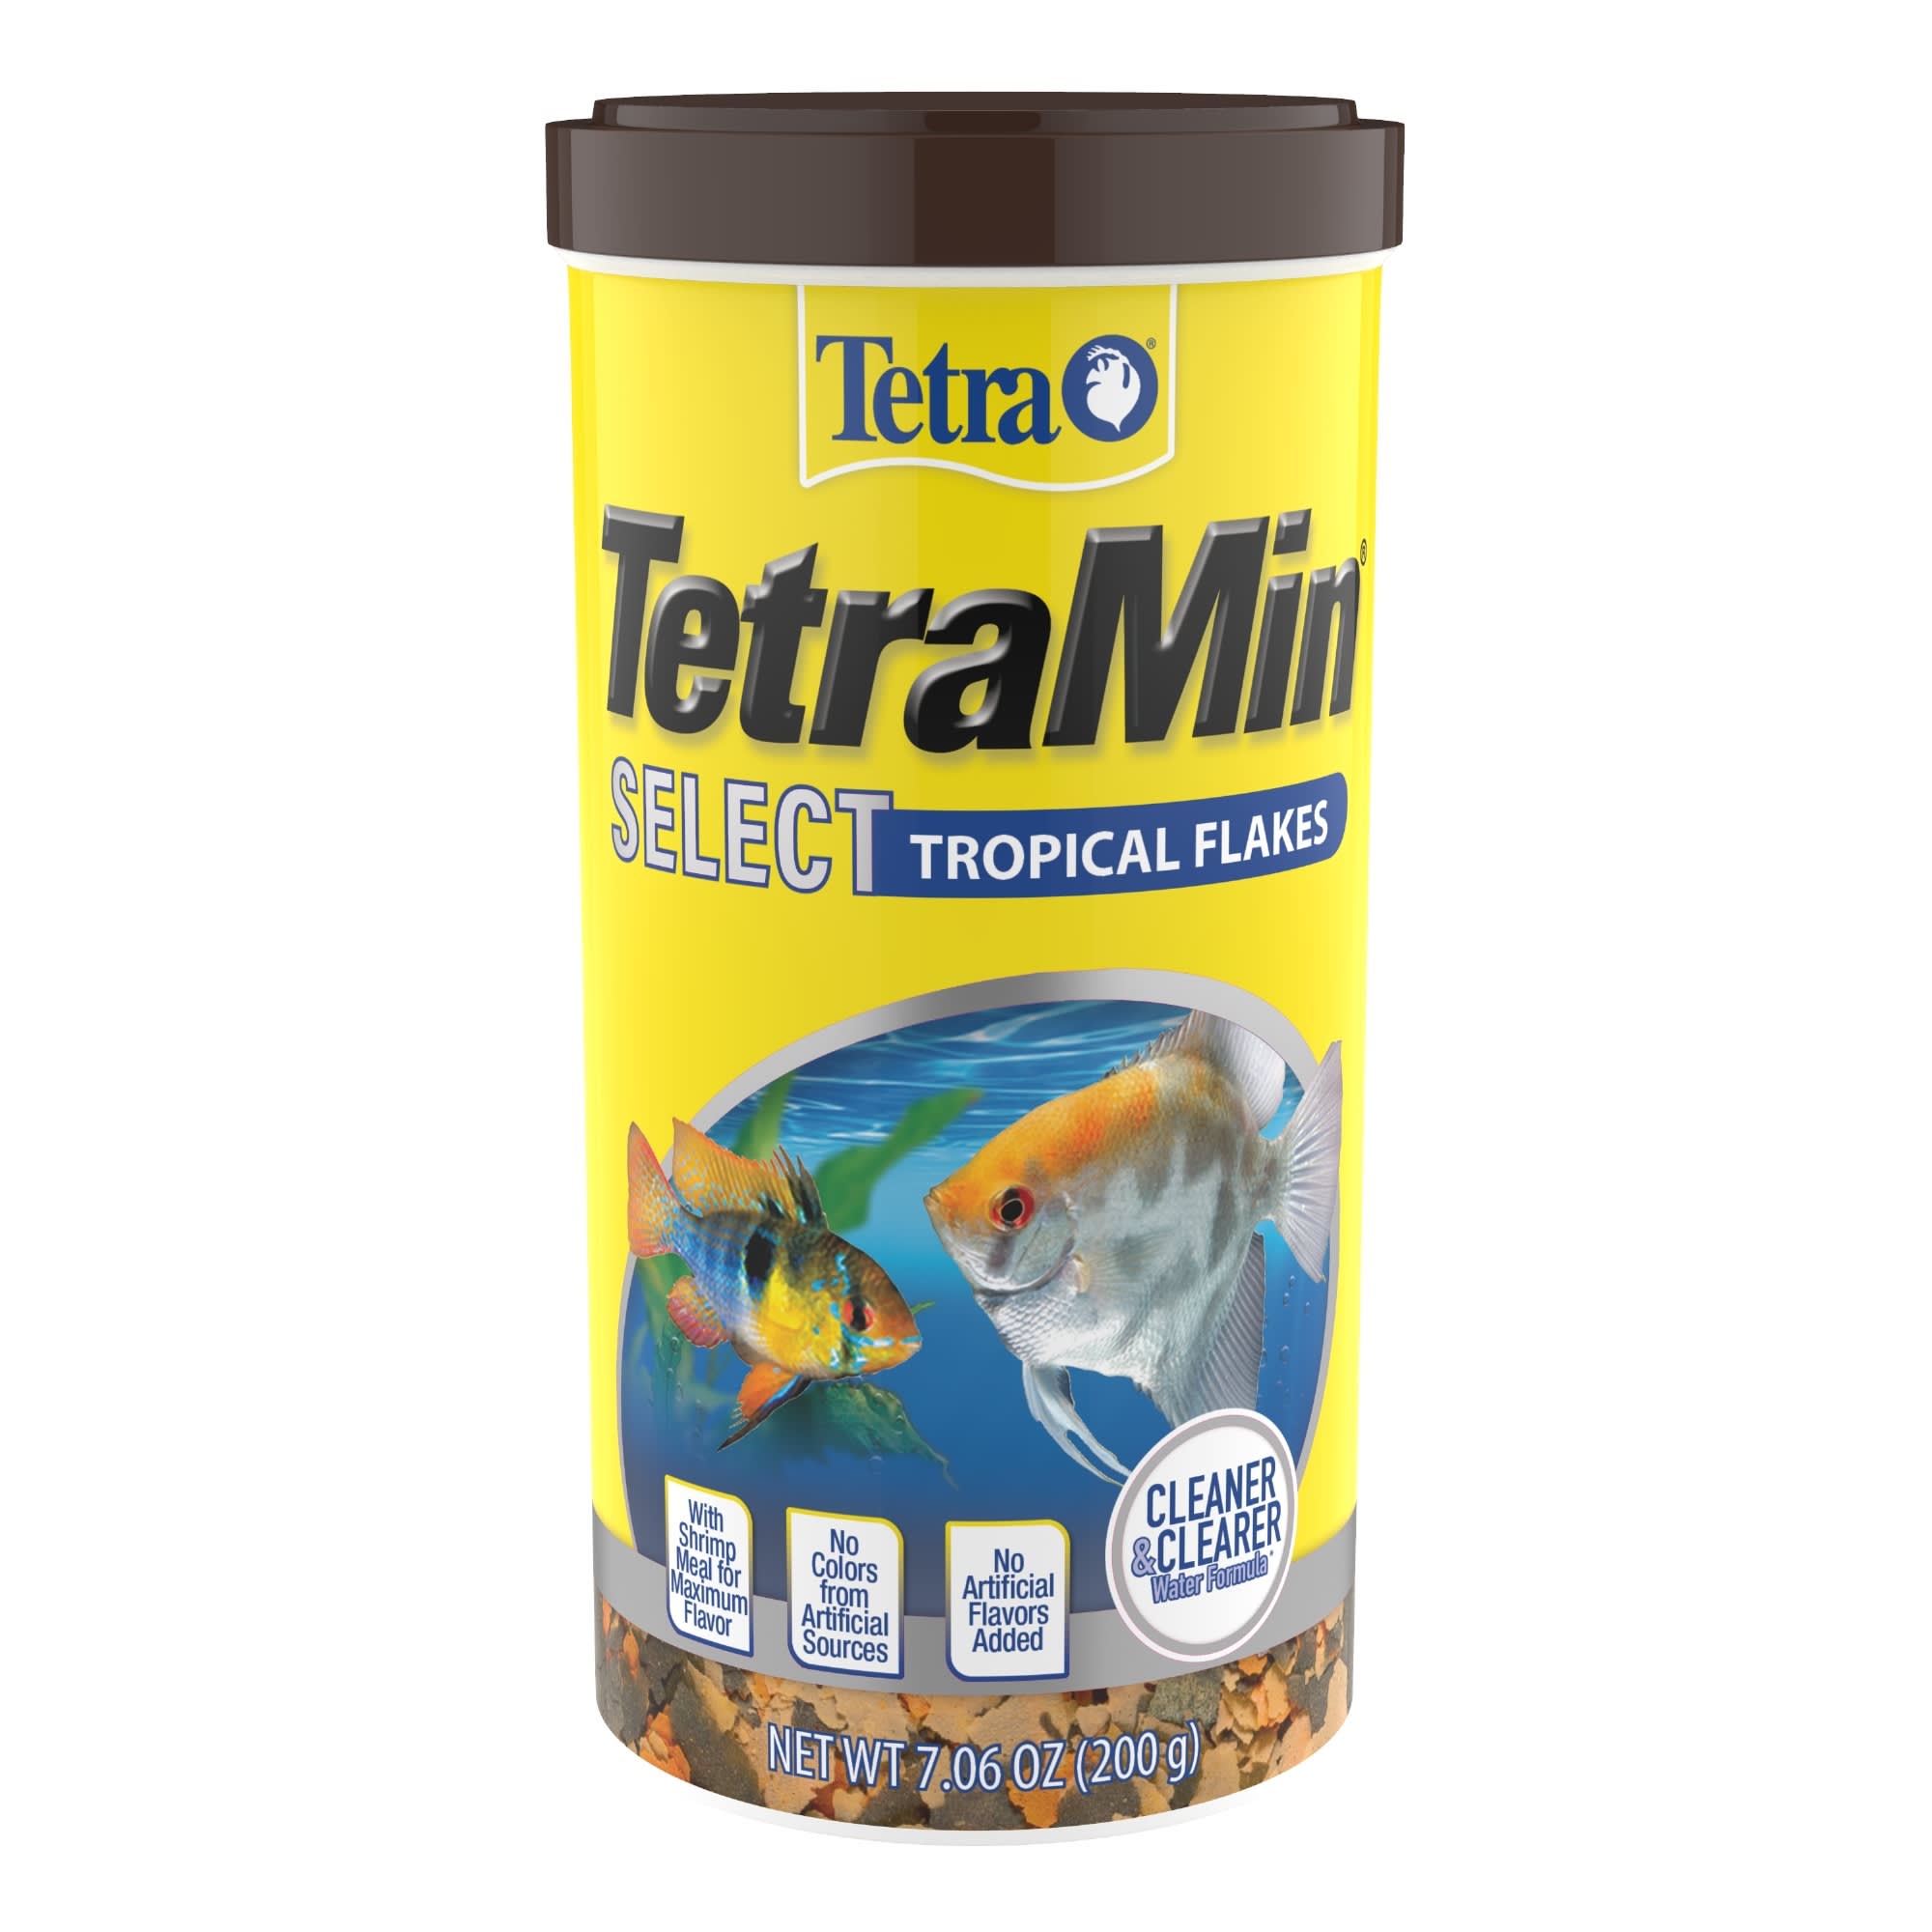 TetraMin Flakes Review